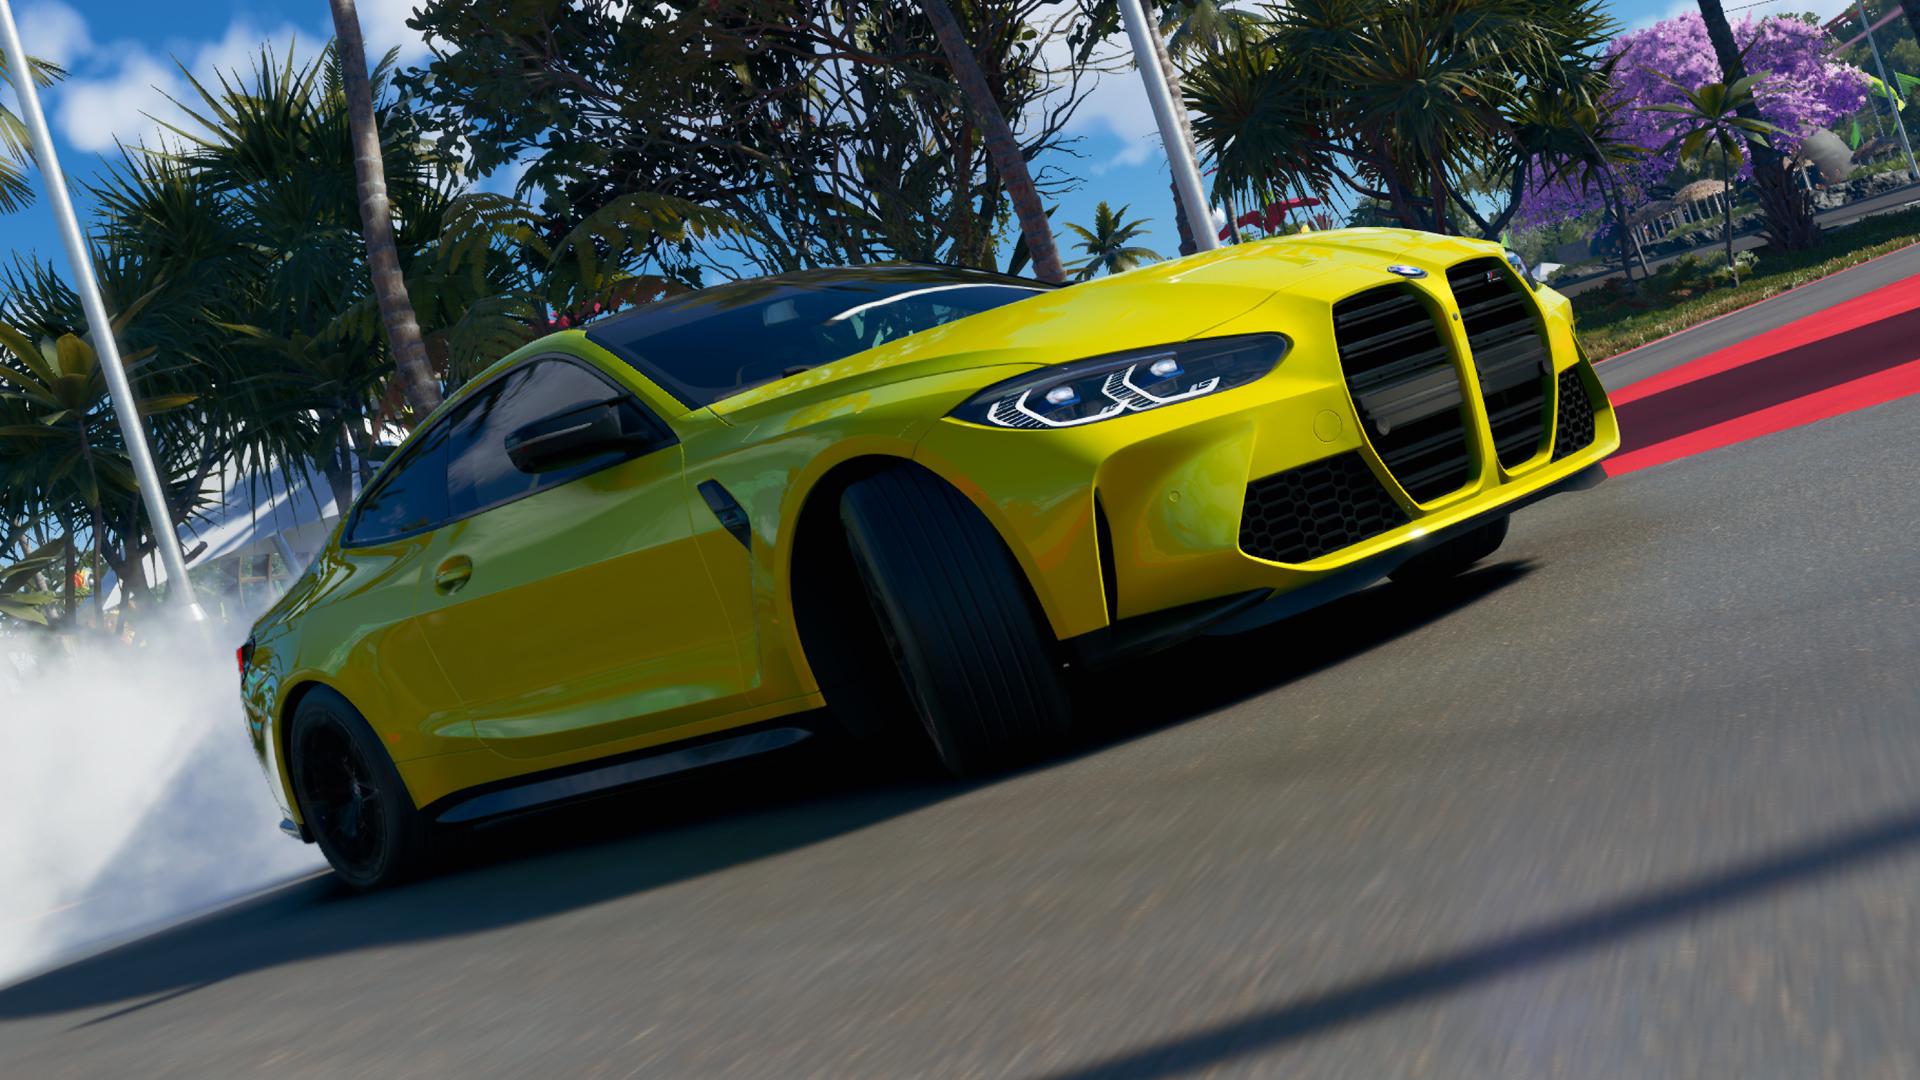 CarX Drift Racing Online now supports cross-platform multiplayer